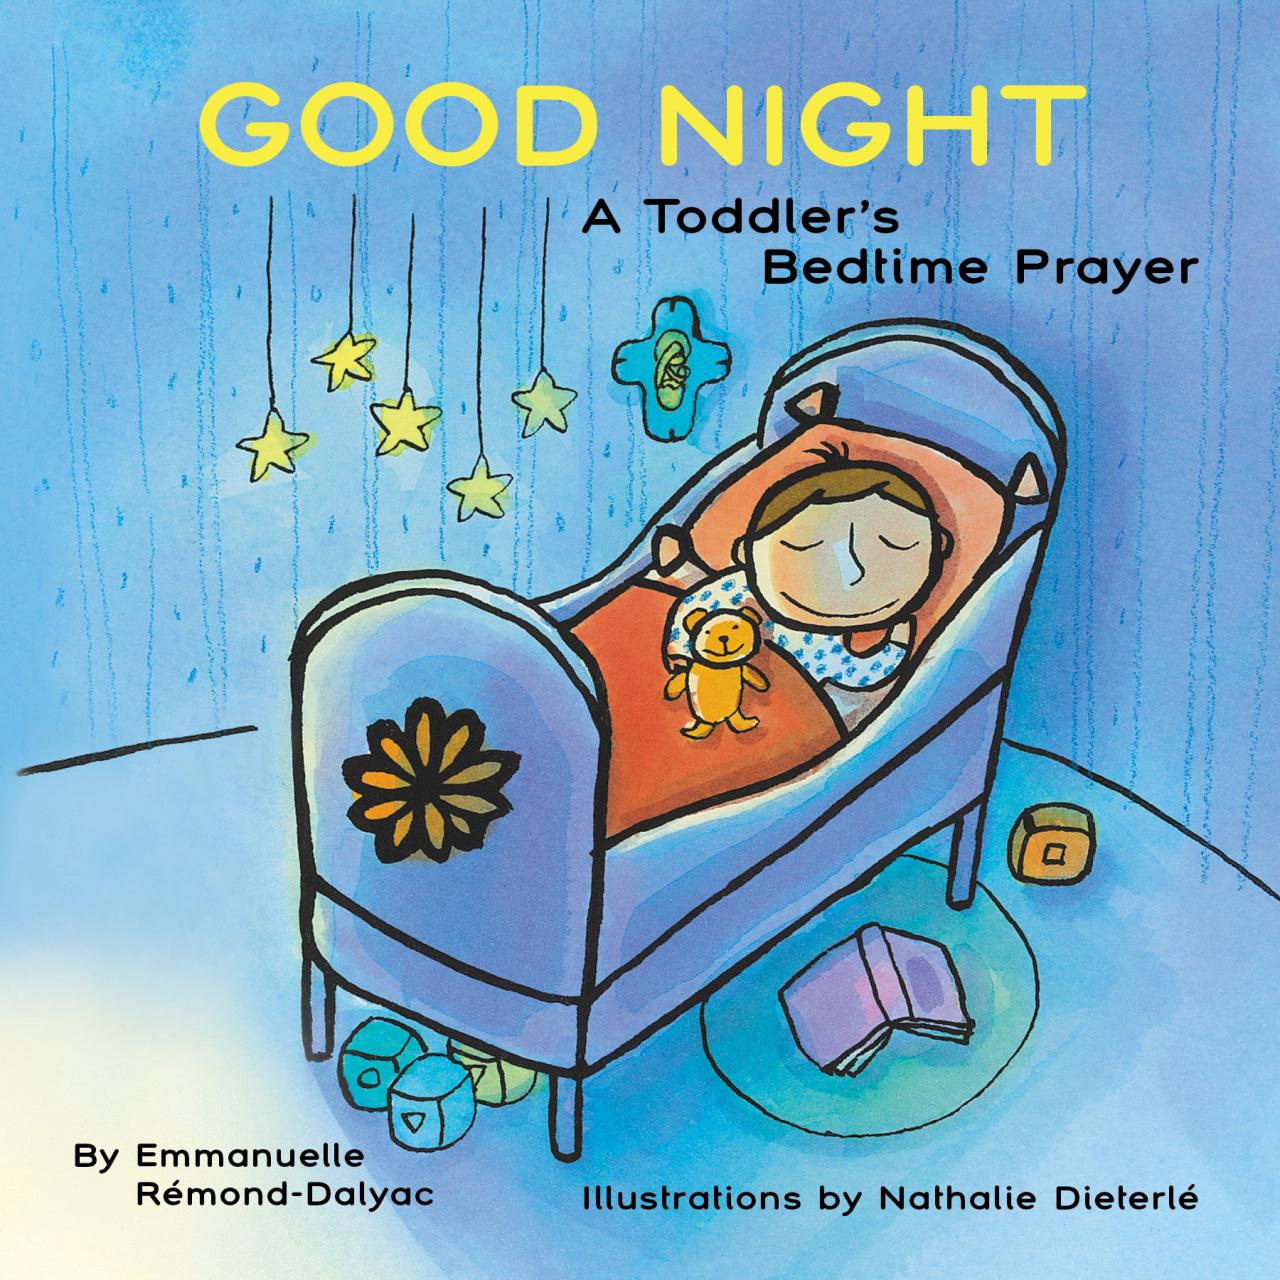 Bedtime prayers psalms nighttime scriptures intoxicatedonlife family